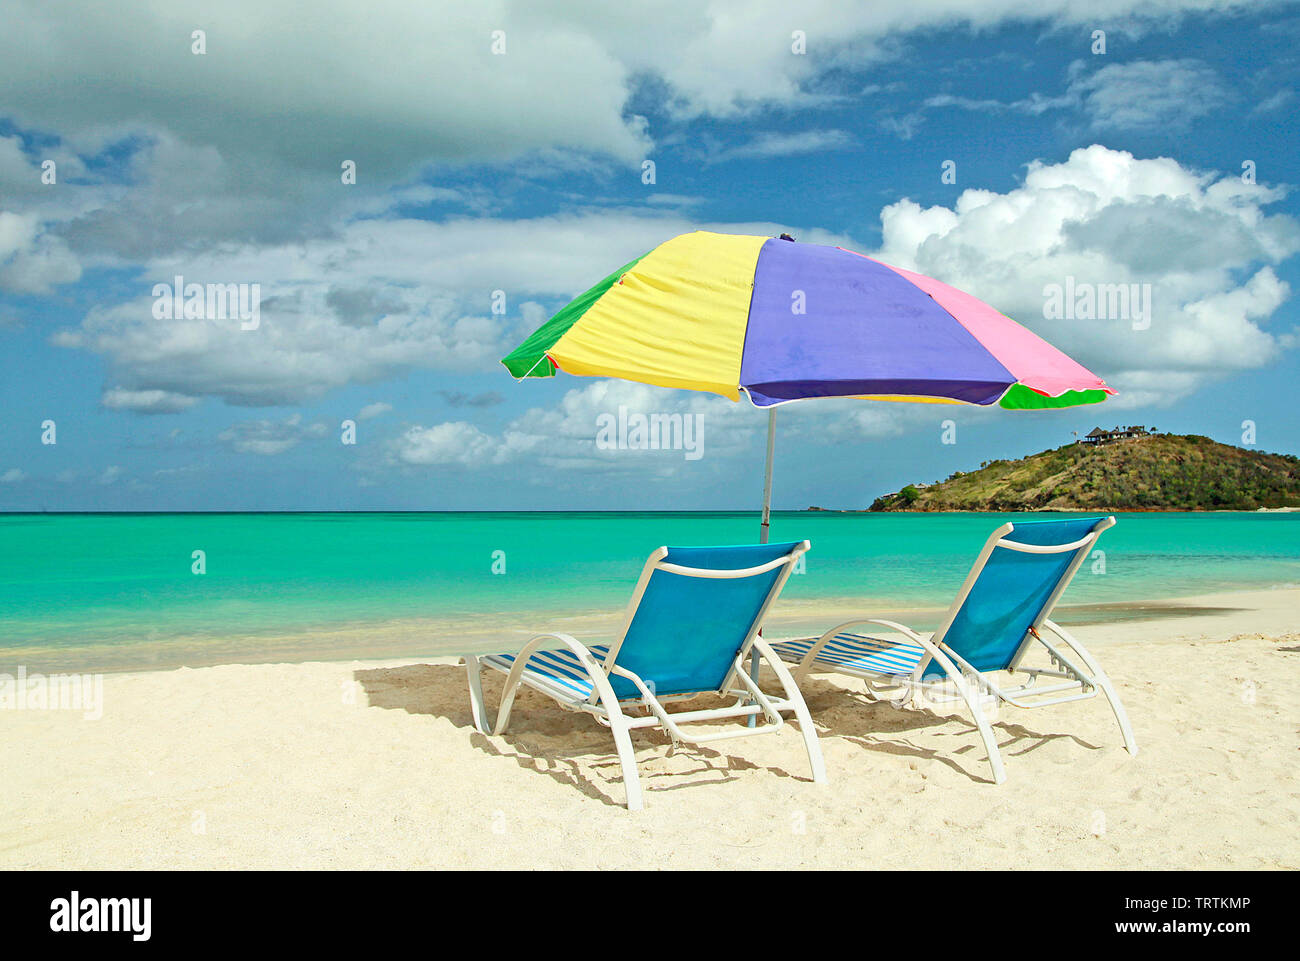 Caribbean island life Stock Photo